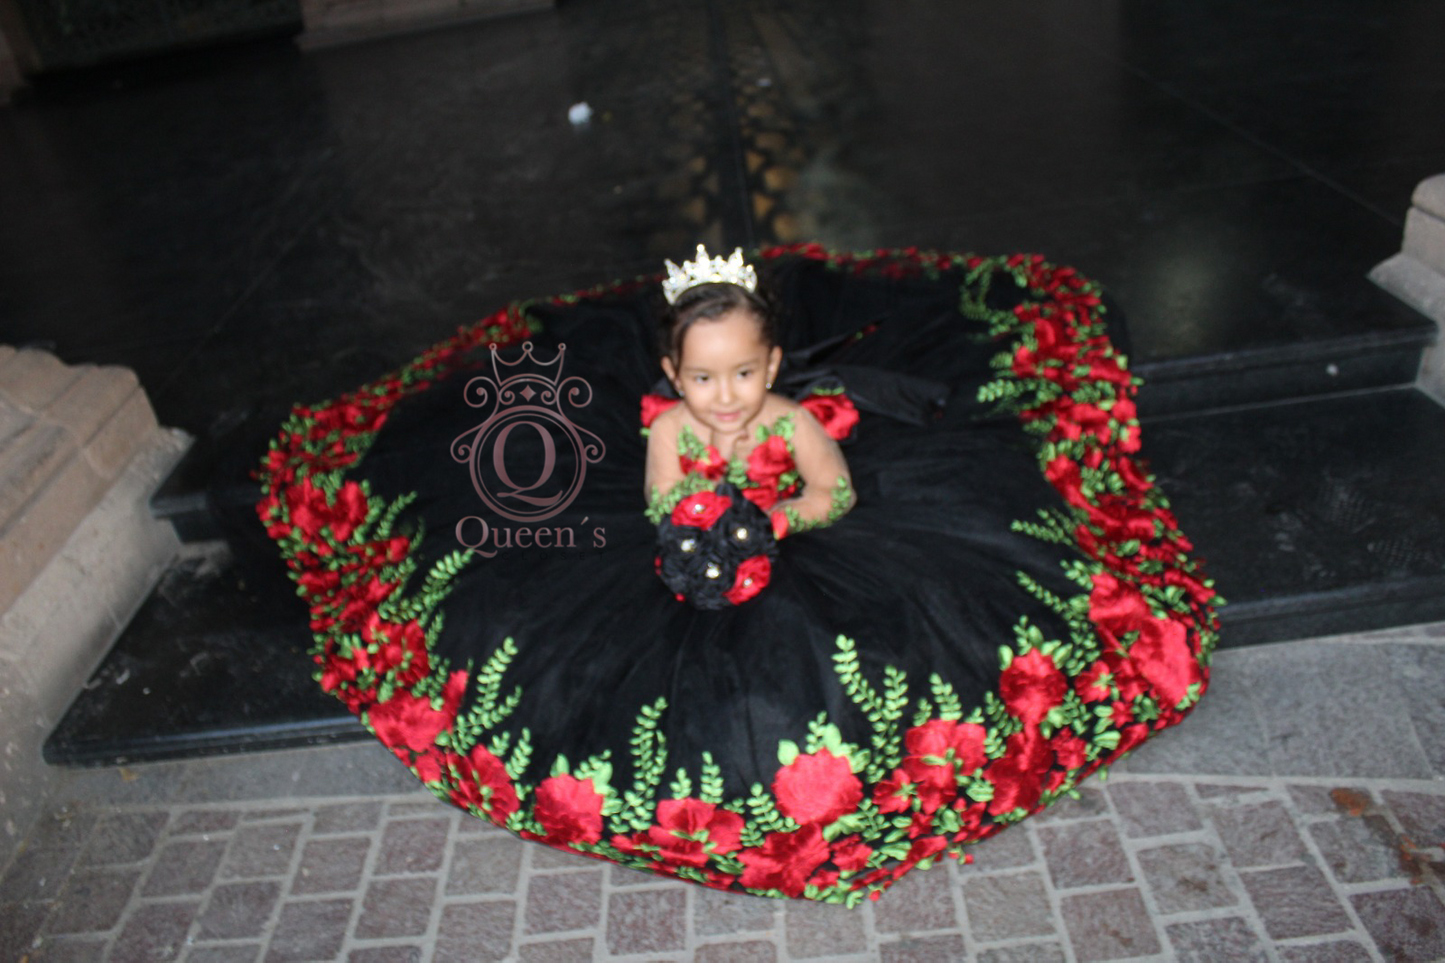 Maria Package (Dress, Petticoat, Bouquet, Crown)